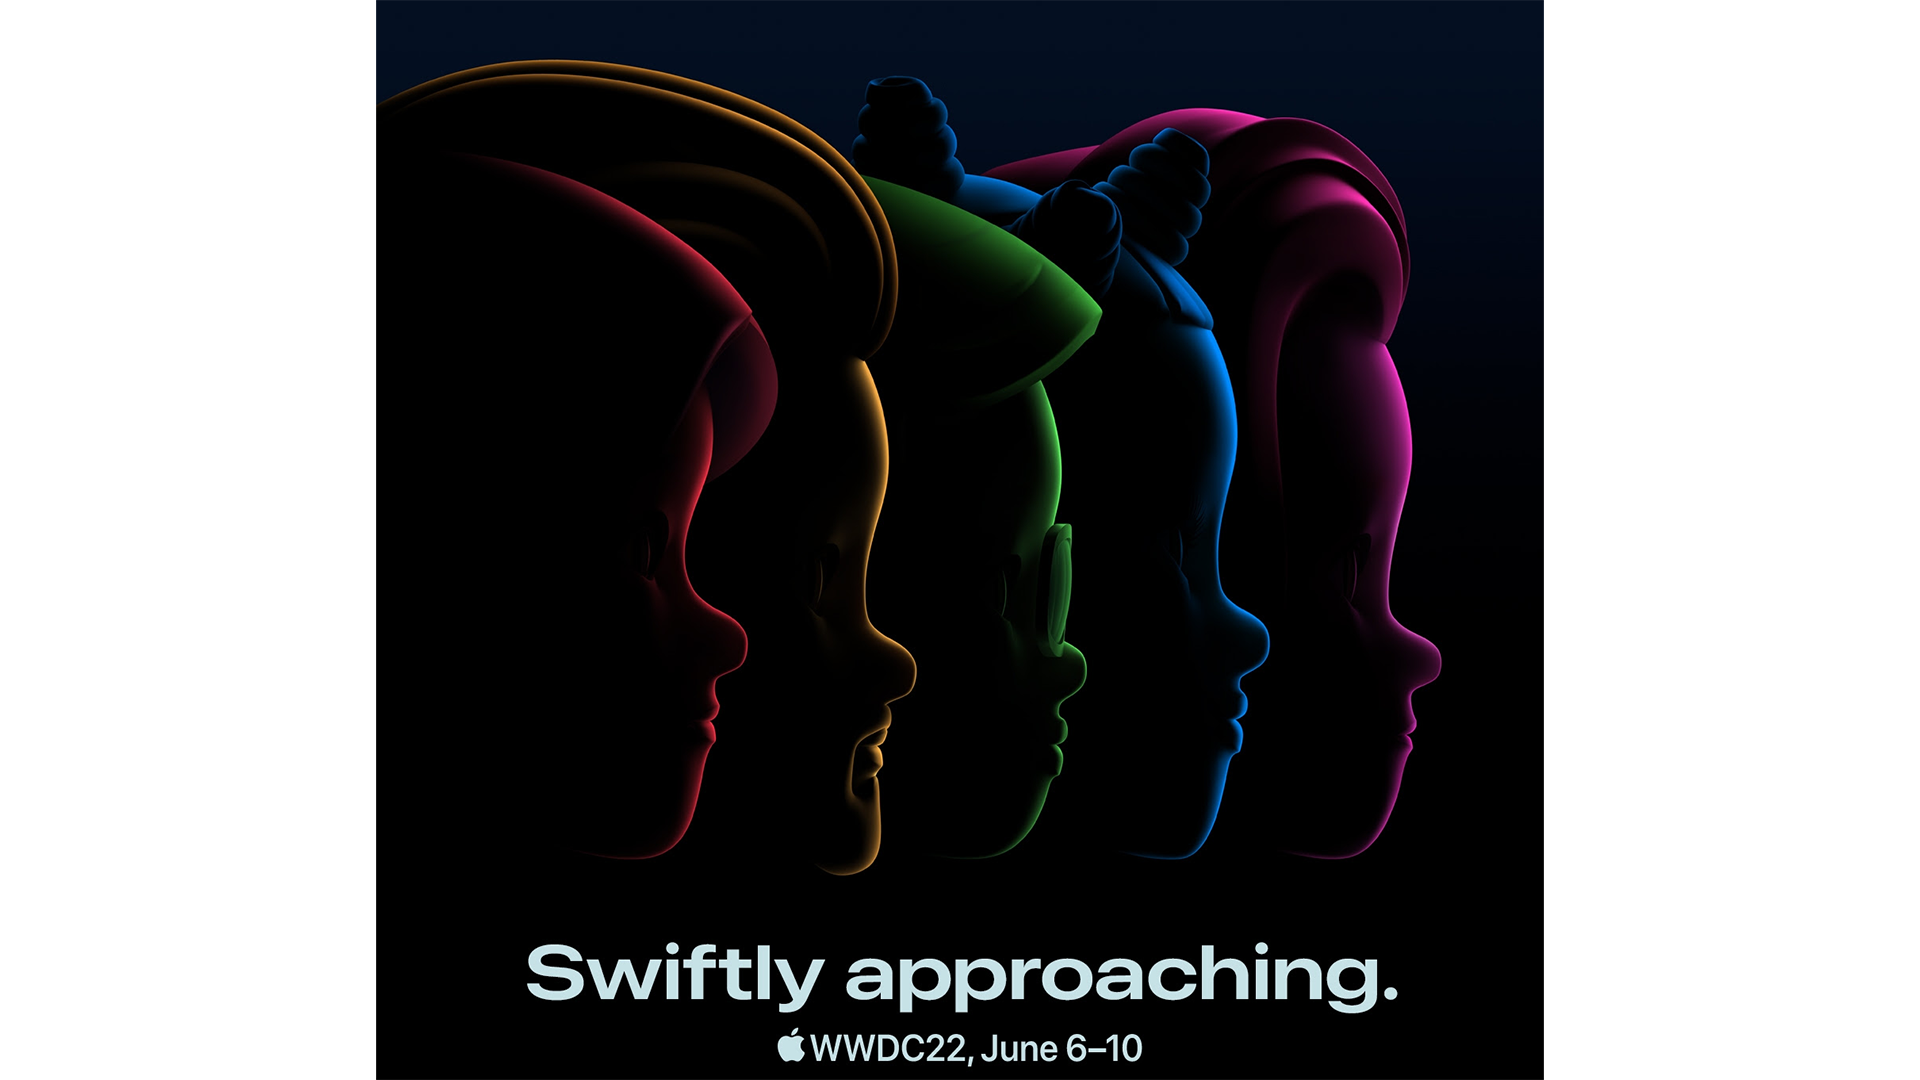 WWDC 2022 Keynote invite, showing five animoji's